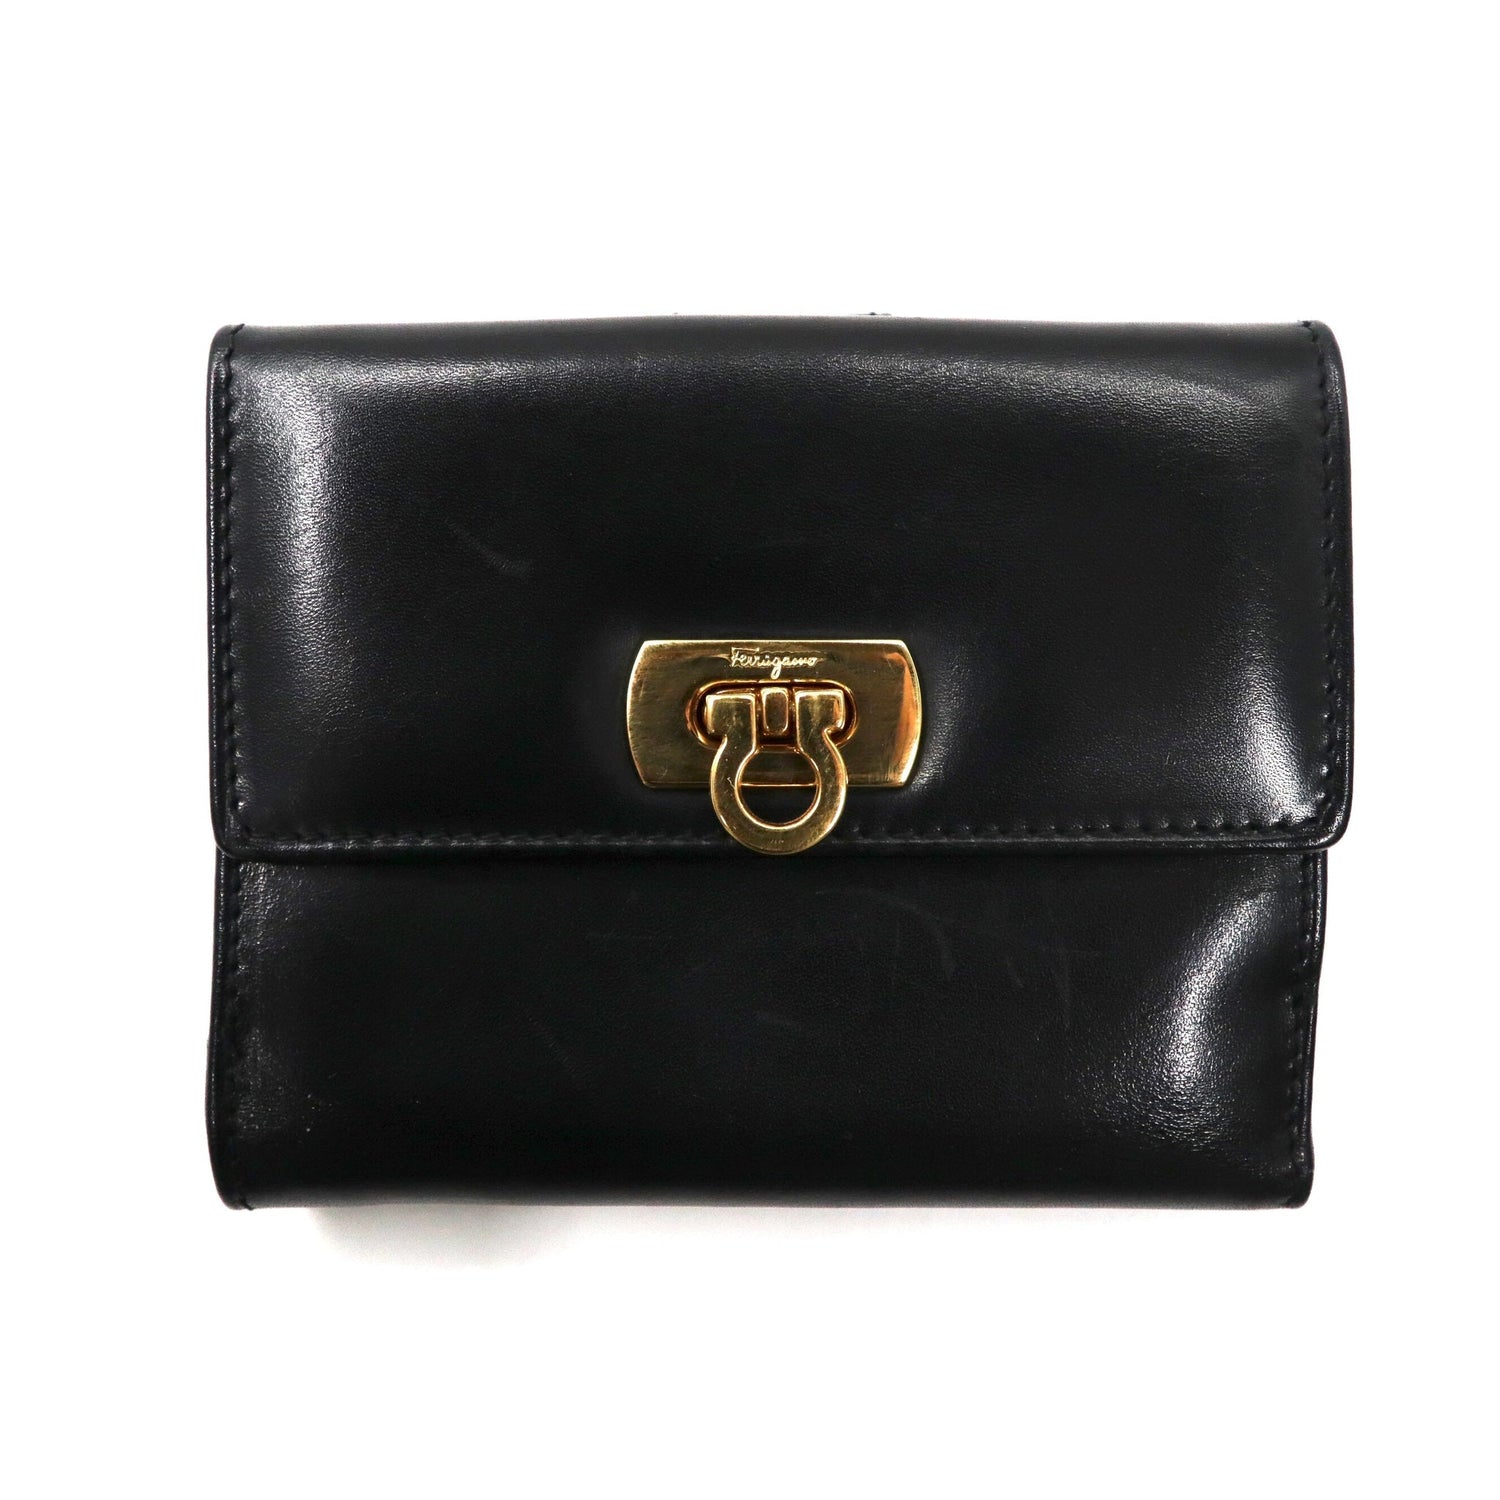 Ferragamo VARA leather mini wallet